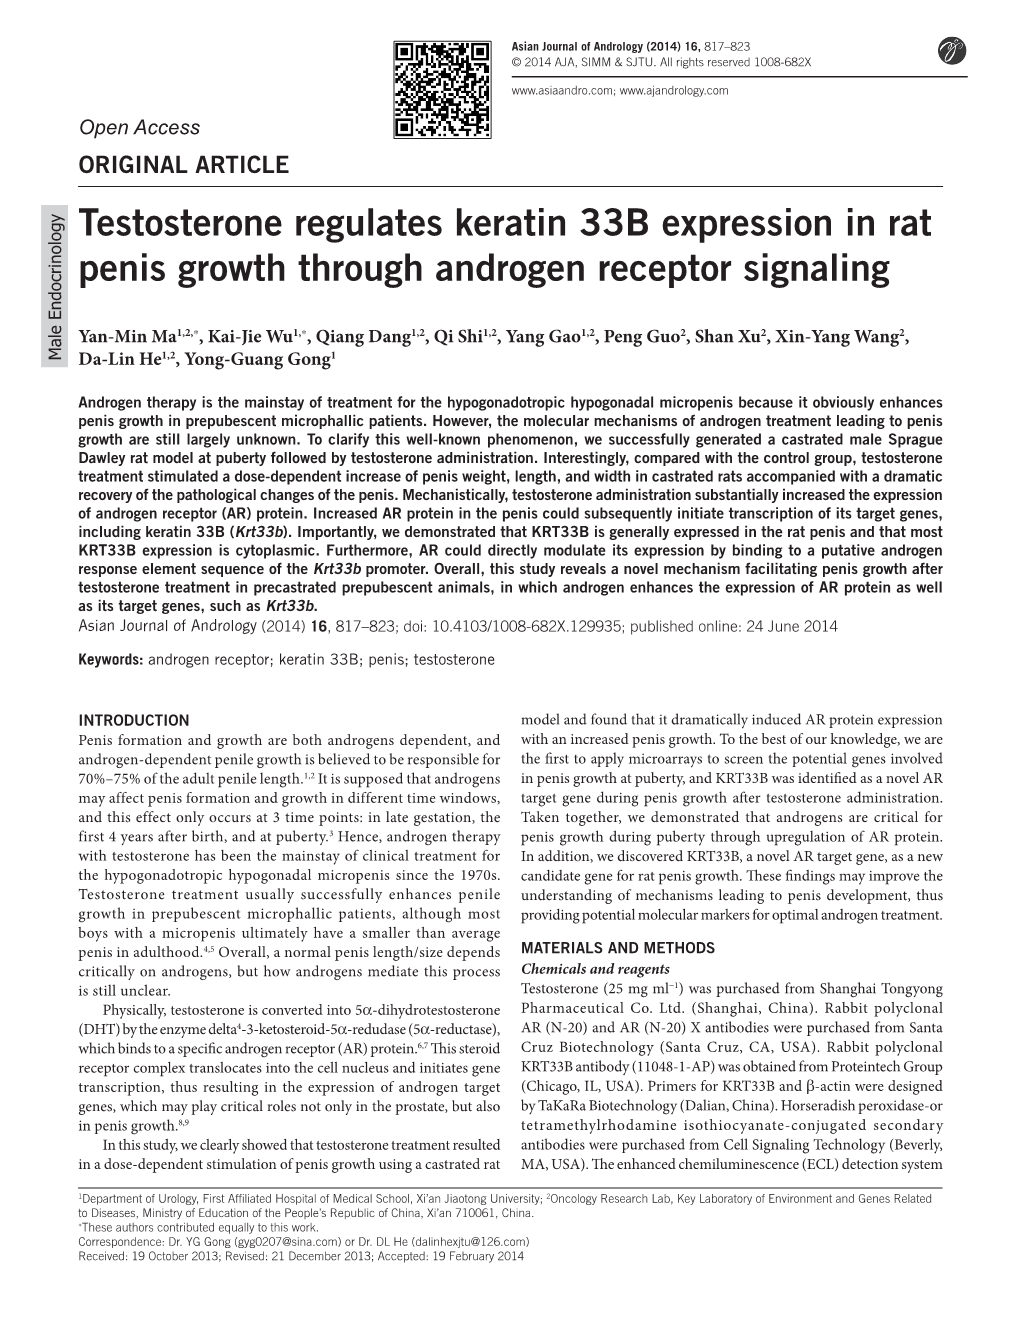 Testosterone Regulates Keratin 33B Expression in Rat Penis Growth Through Androgen Receptor Signaling